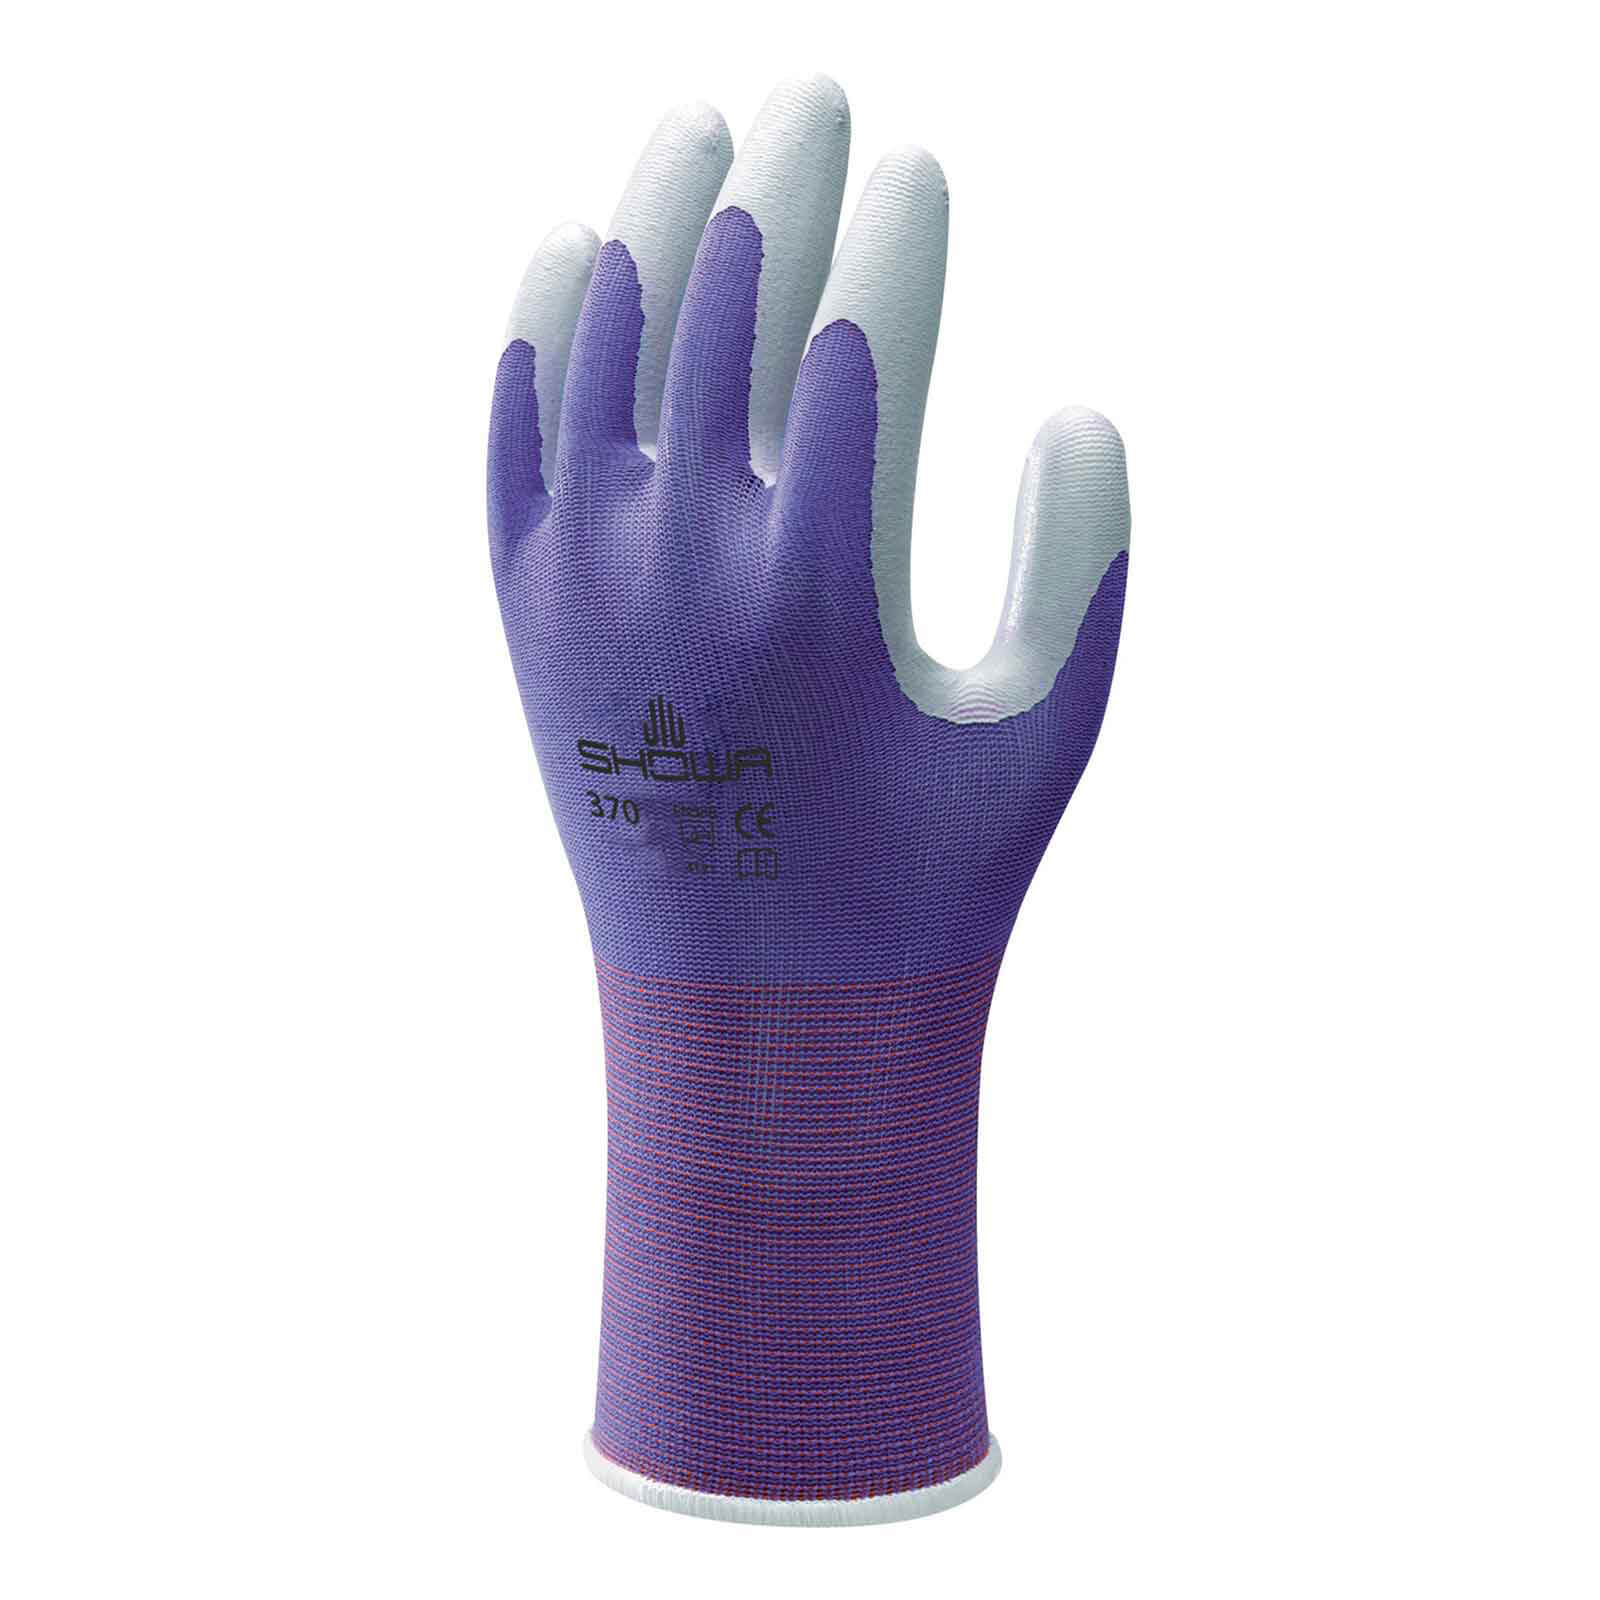 Image of Kew Gardens Multi Purpose Nitrile Coated Gardening Gloves Purple S